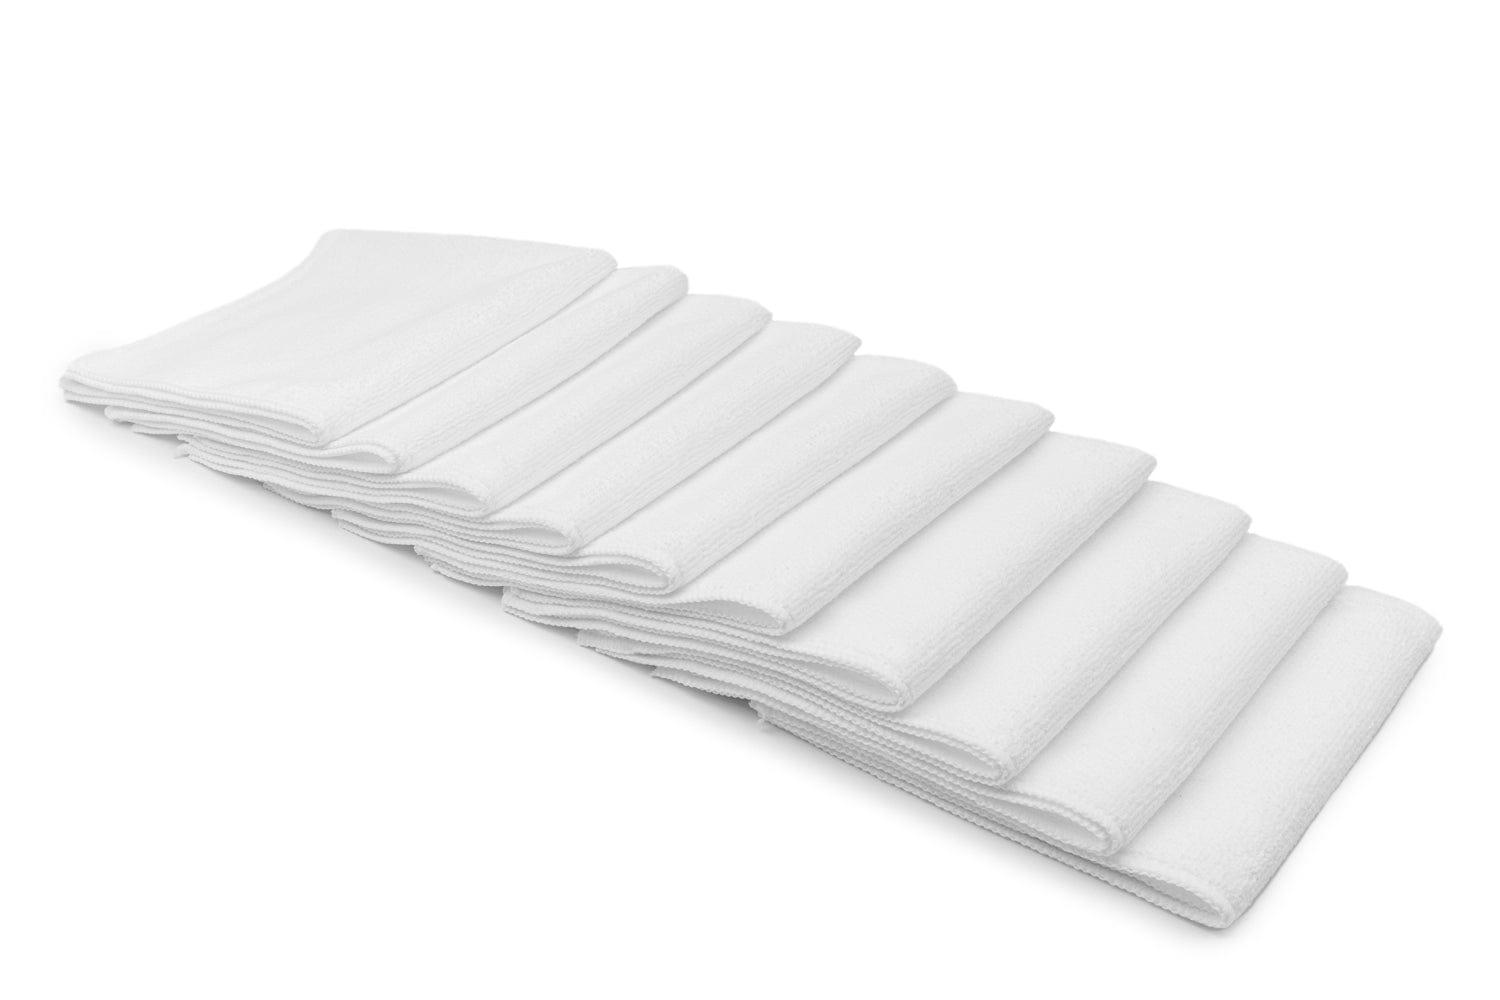 Autofiber White / Edgeless [Utility 300] All-Purpose Edgeless Microfiber Towel (16 in x 16 in., 300 gsm) 10pack